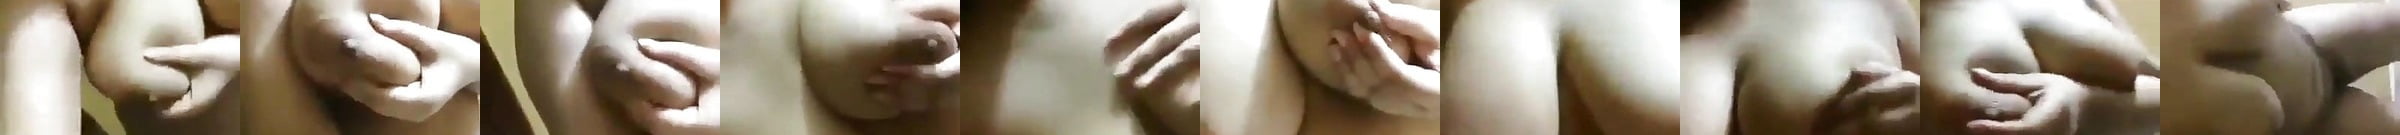 Nanga Sex Mujra Pk Free Granny Hd Porn Video 79